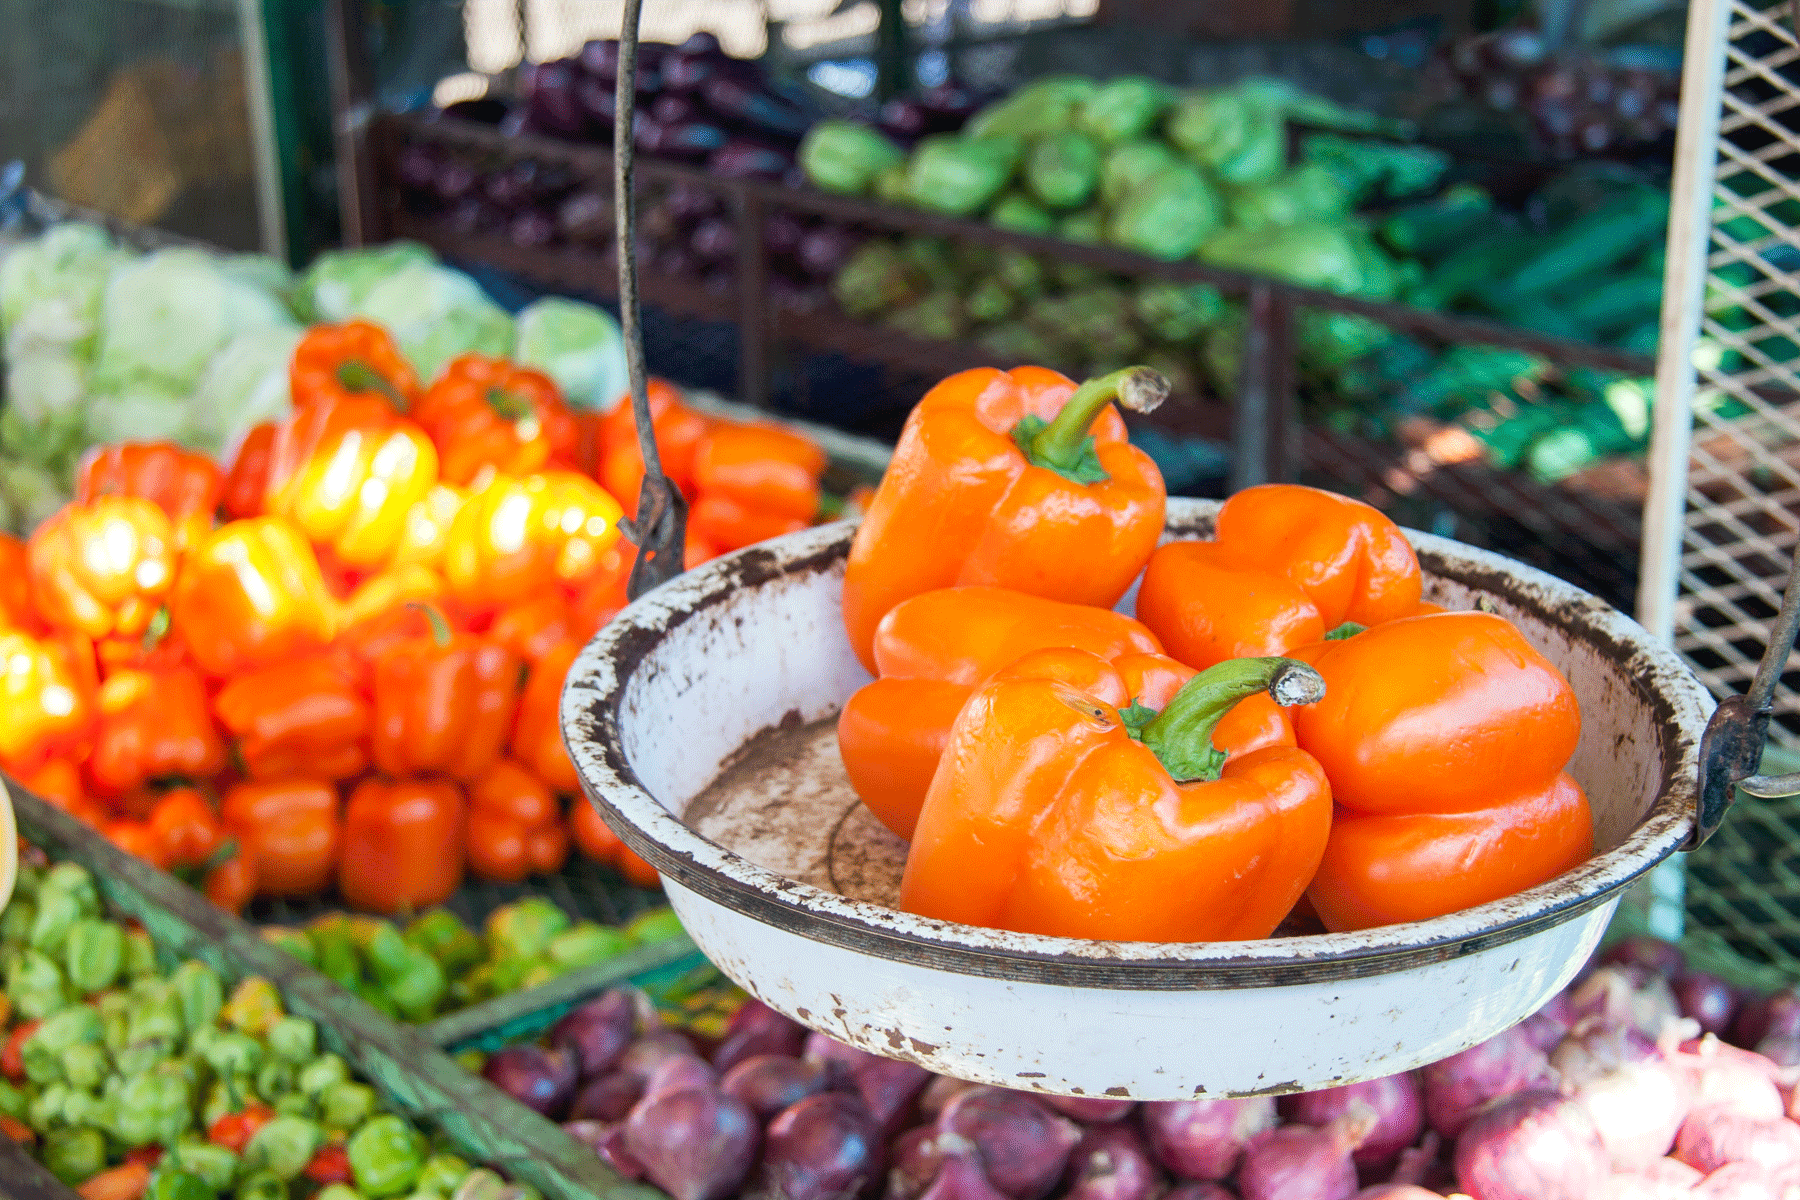 puerto-plata-dominican-repubic-farmers-market-produce